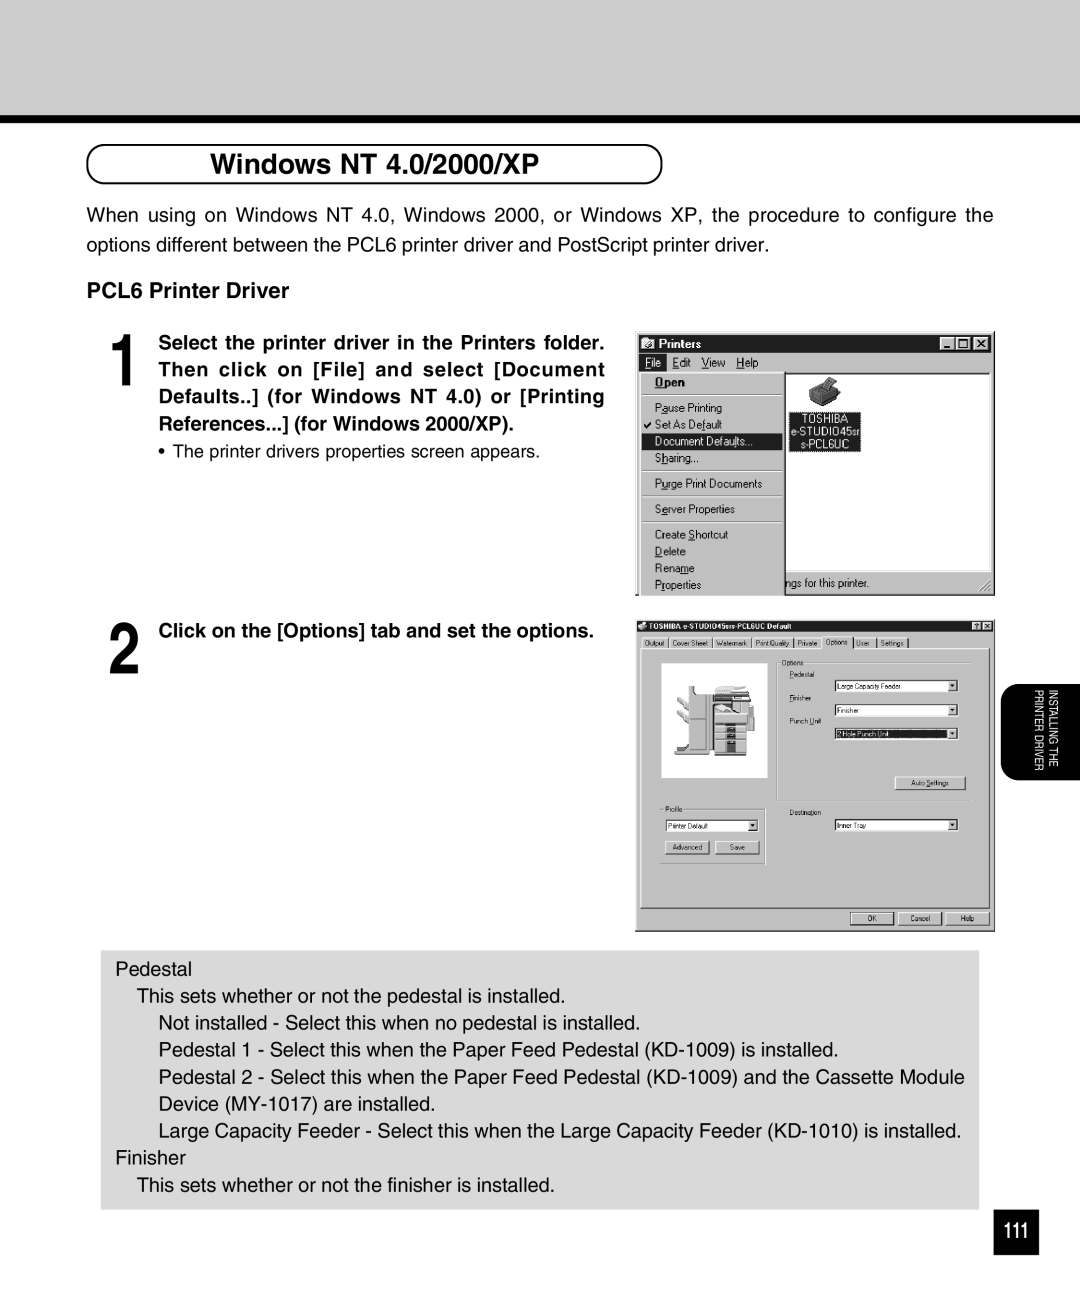 Toshiba GA-1040 manual Windows NT 4.0/2000/XP, PCL6 Printer Driver, Click on the Options tab and set the options 